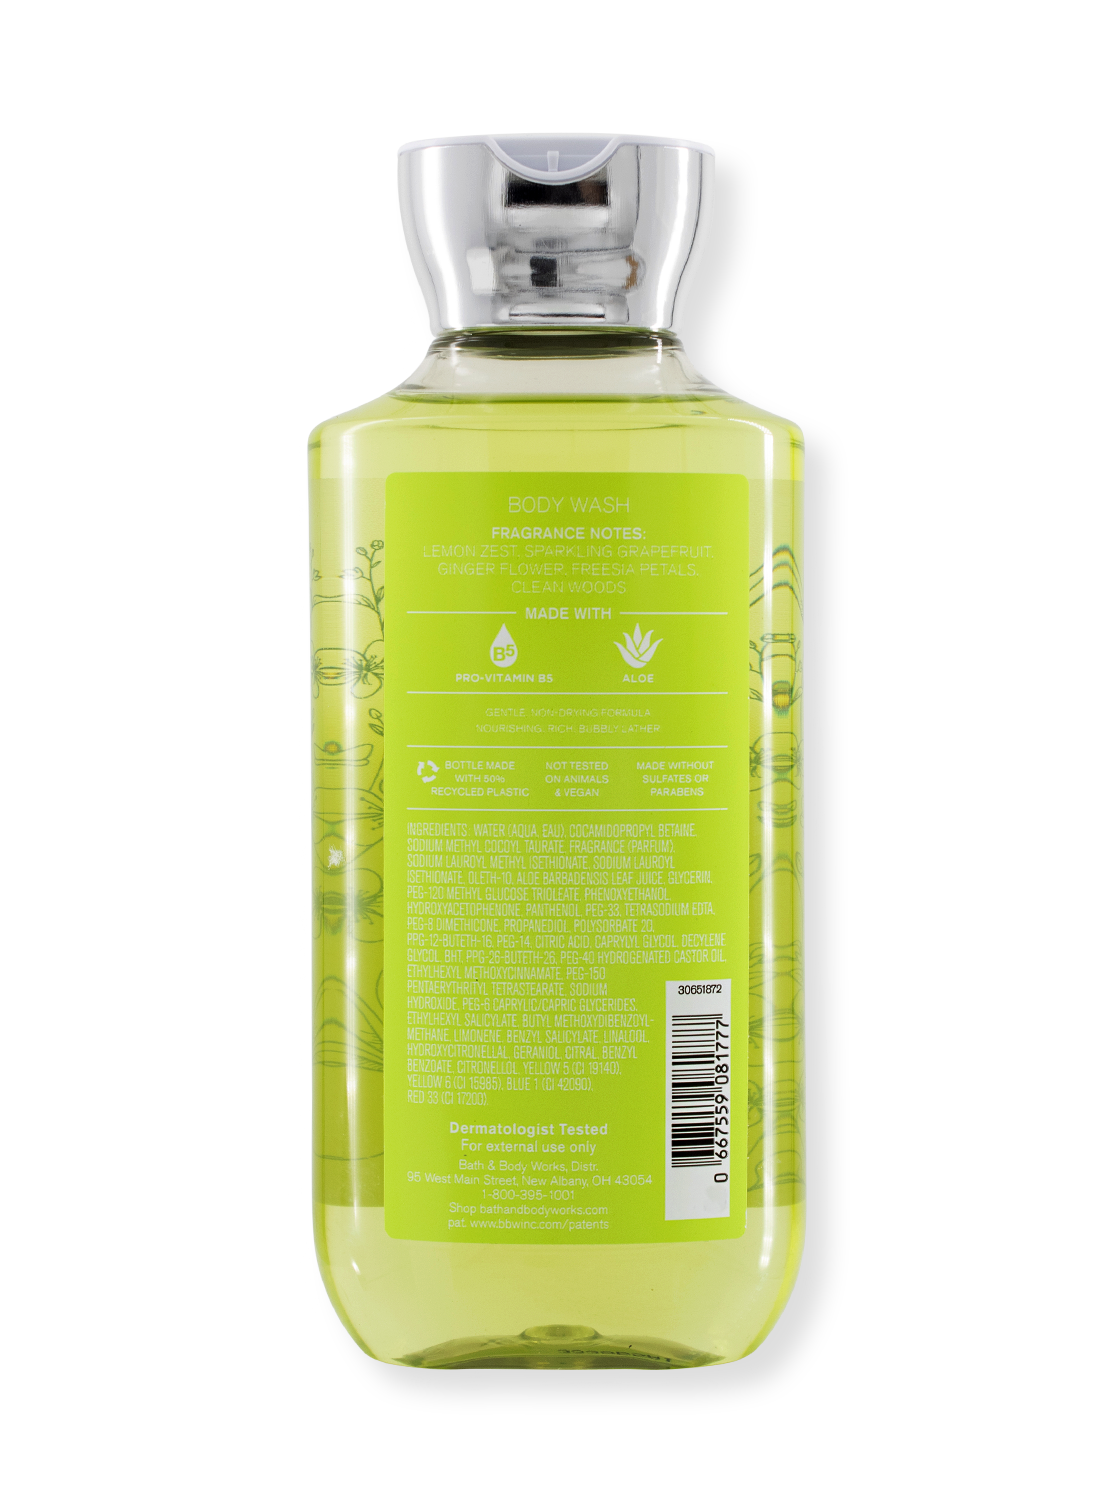 Duschgel/Body Wash - White Citrus - New Design - 295ml